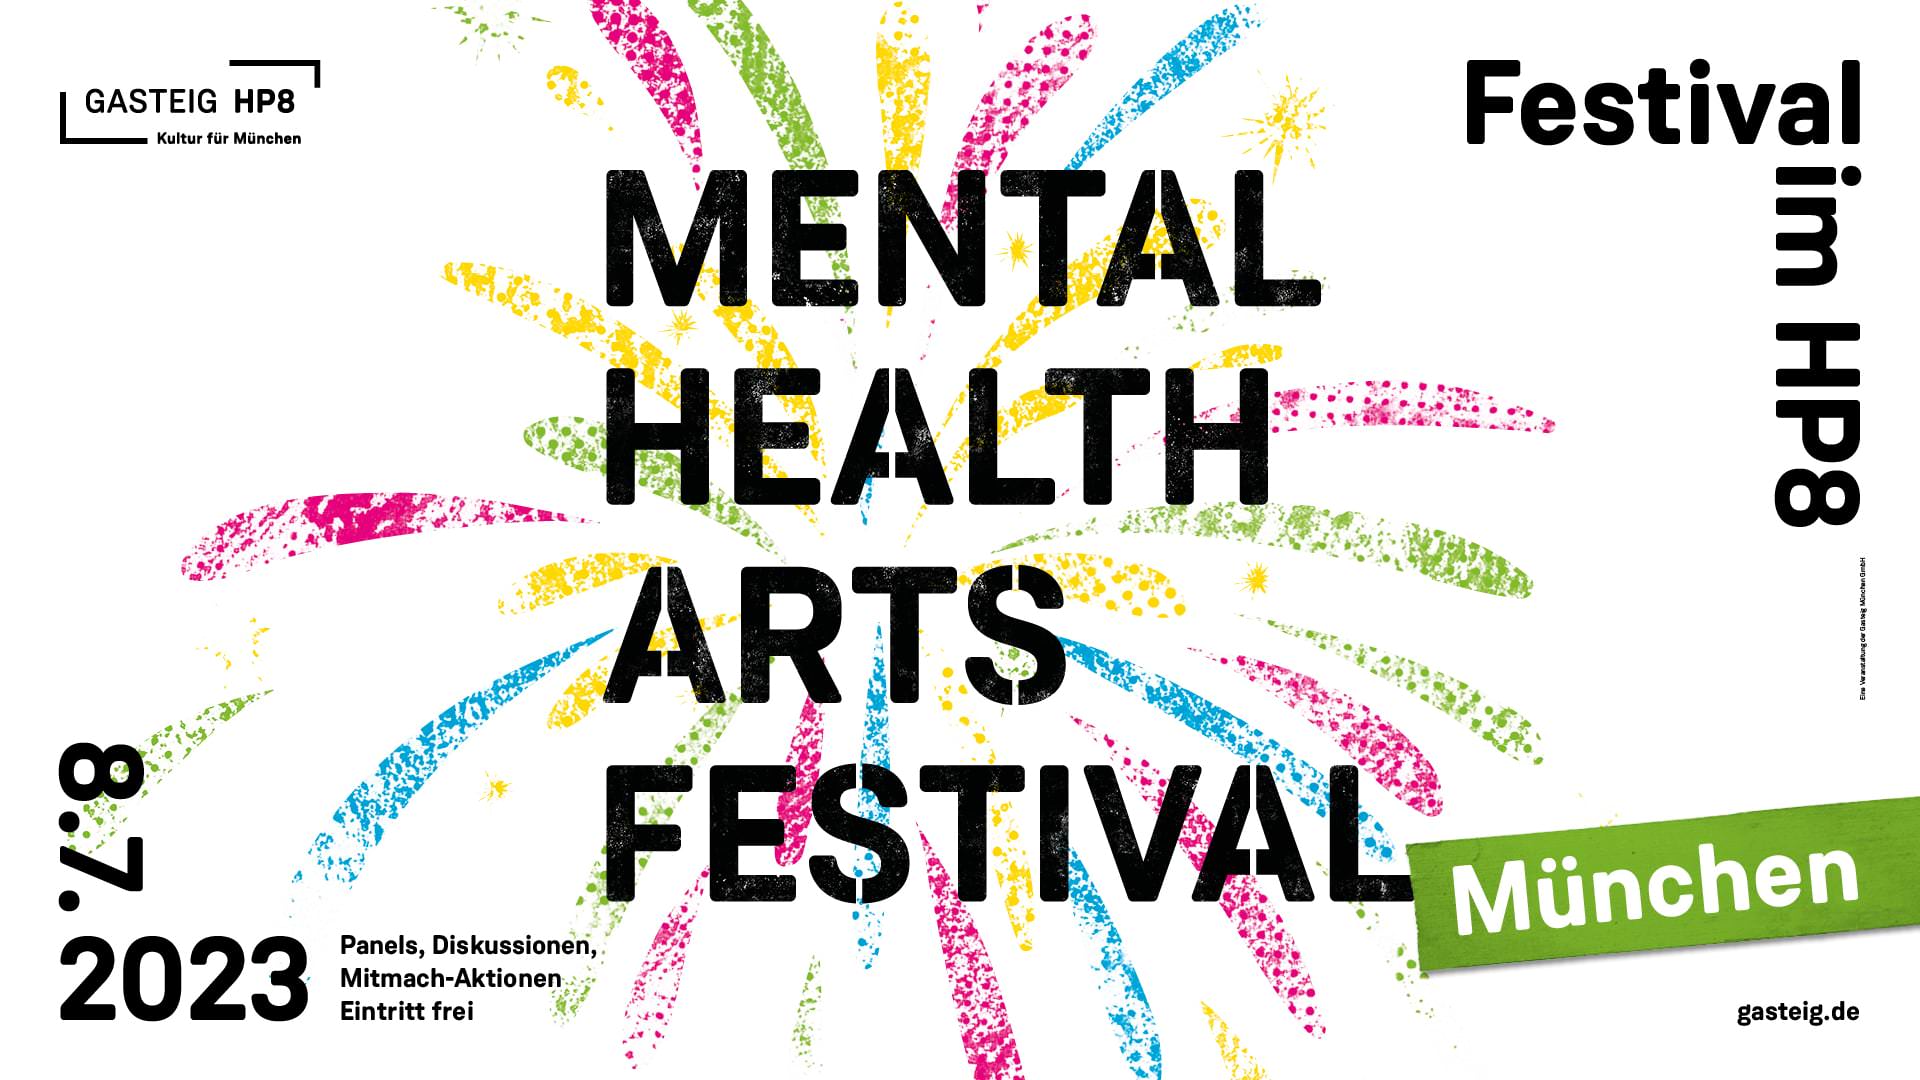 Mental Health Arts Festival